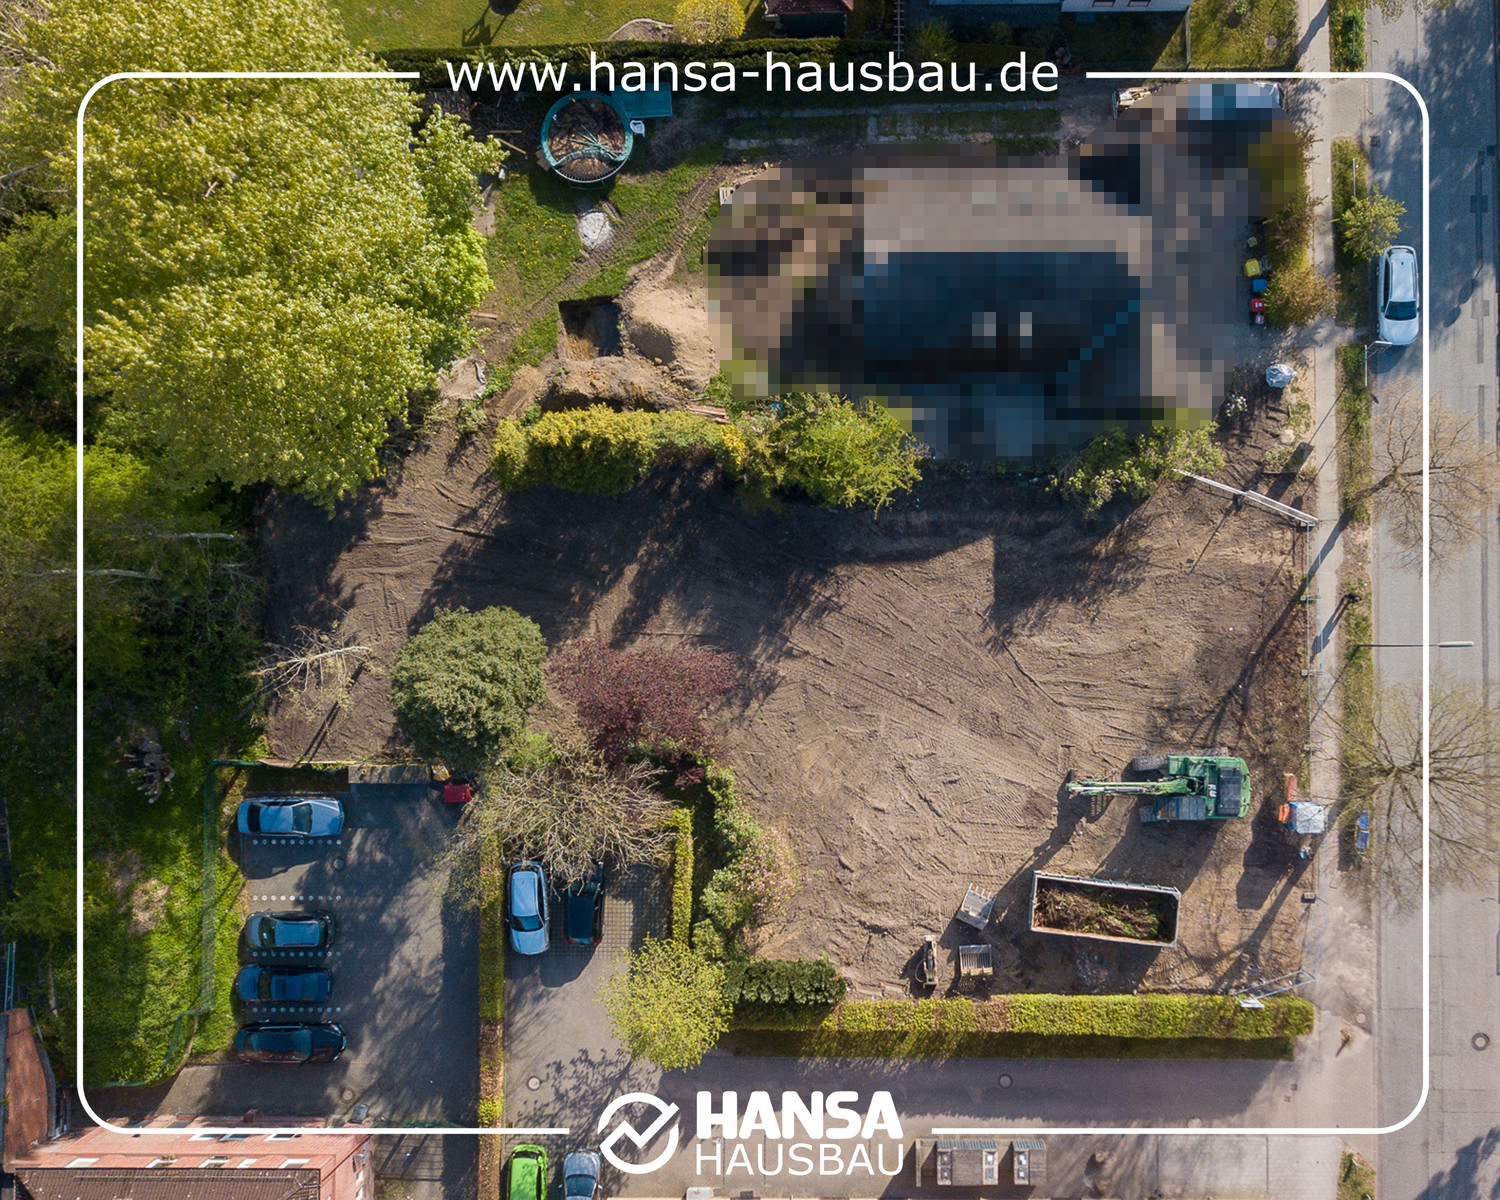 Hansa Hausbau Bauplanung Architektenhaus Neubau Toskanahauss